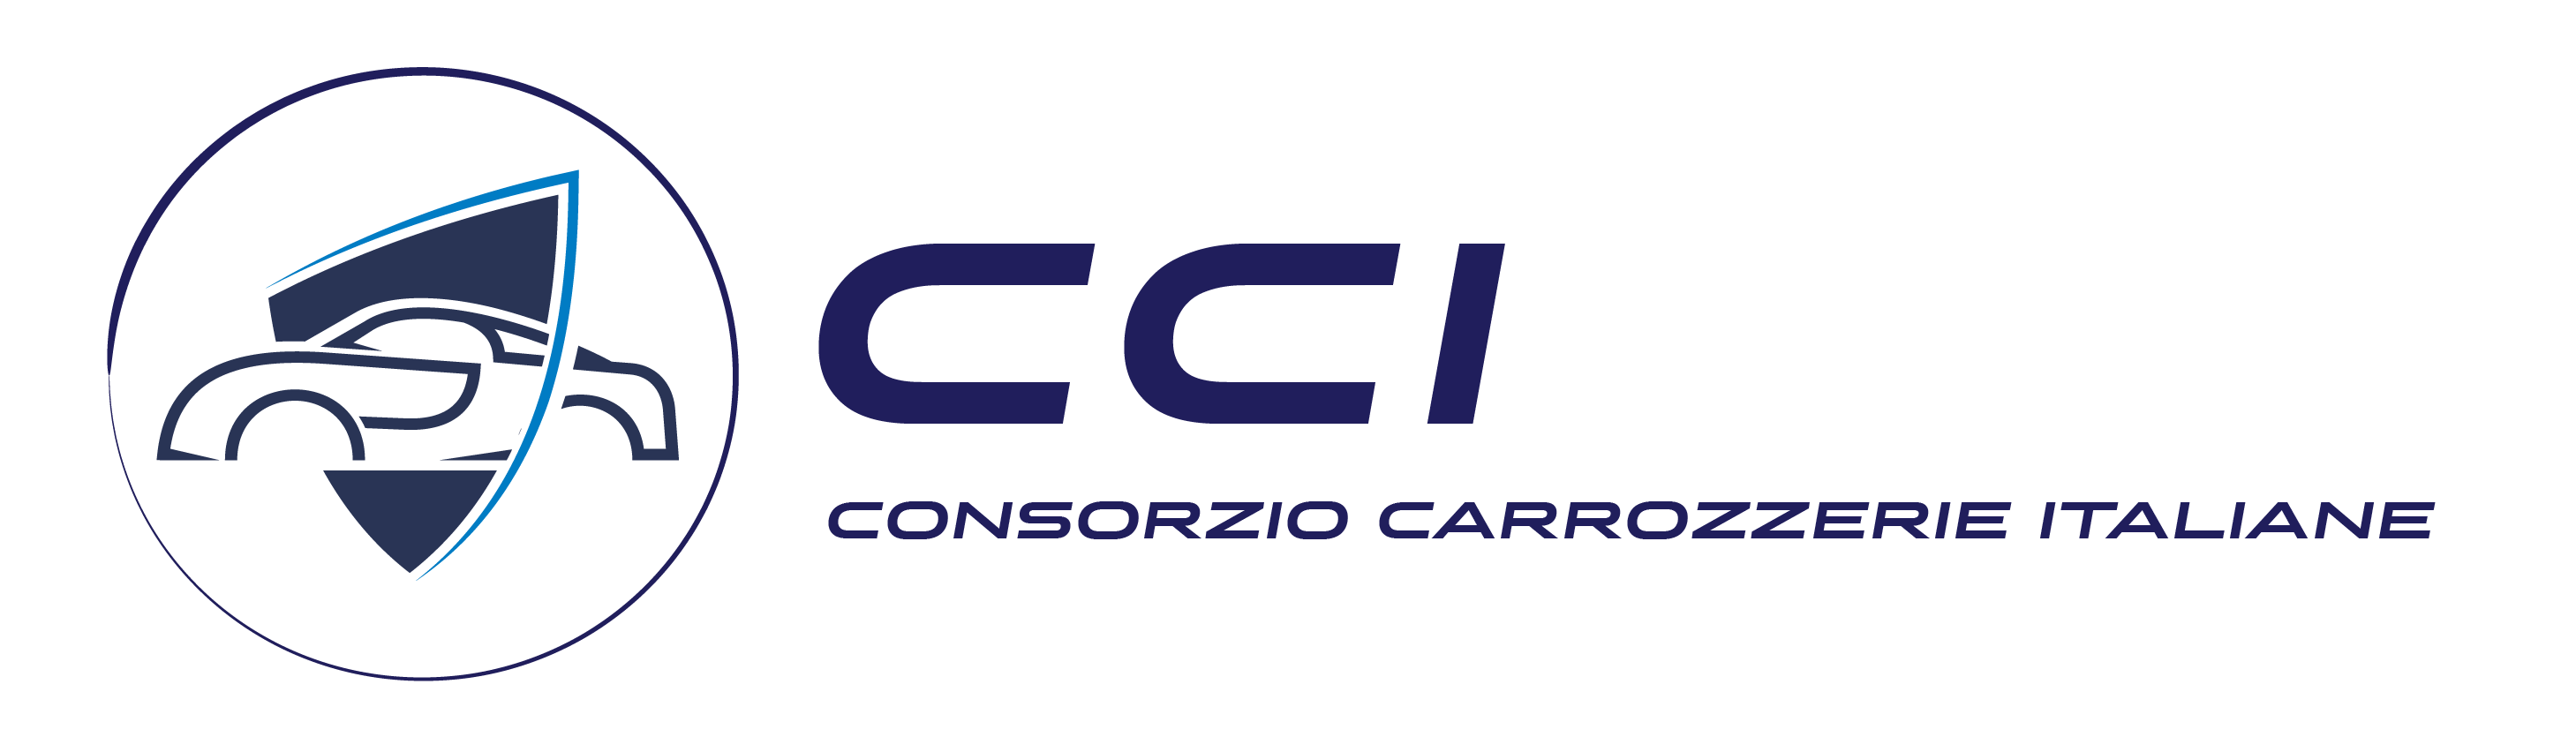 Consorzio carrozzerie italiane